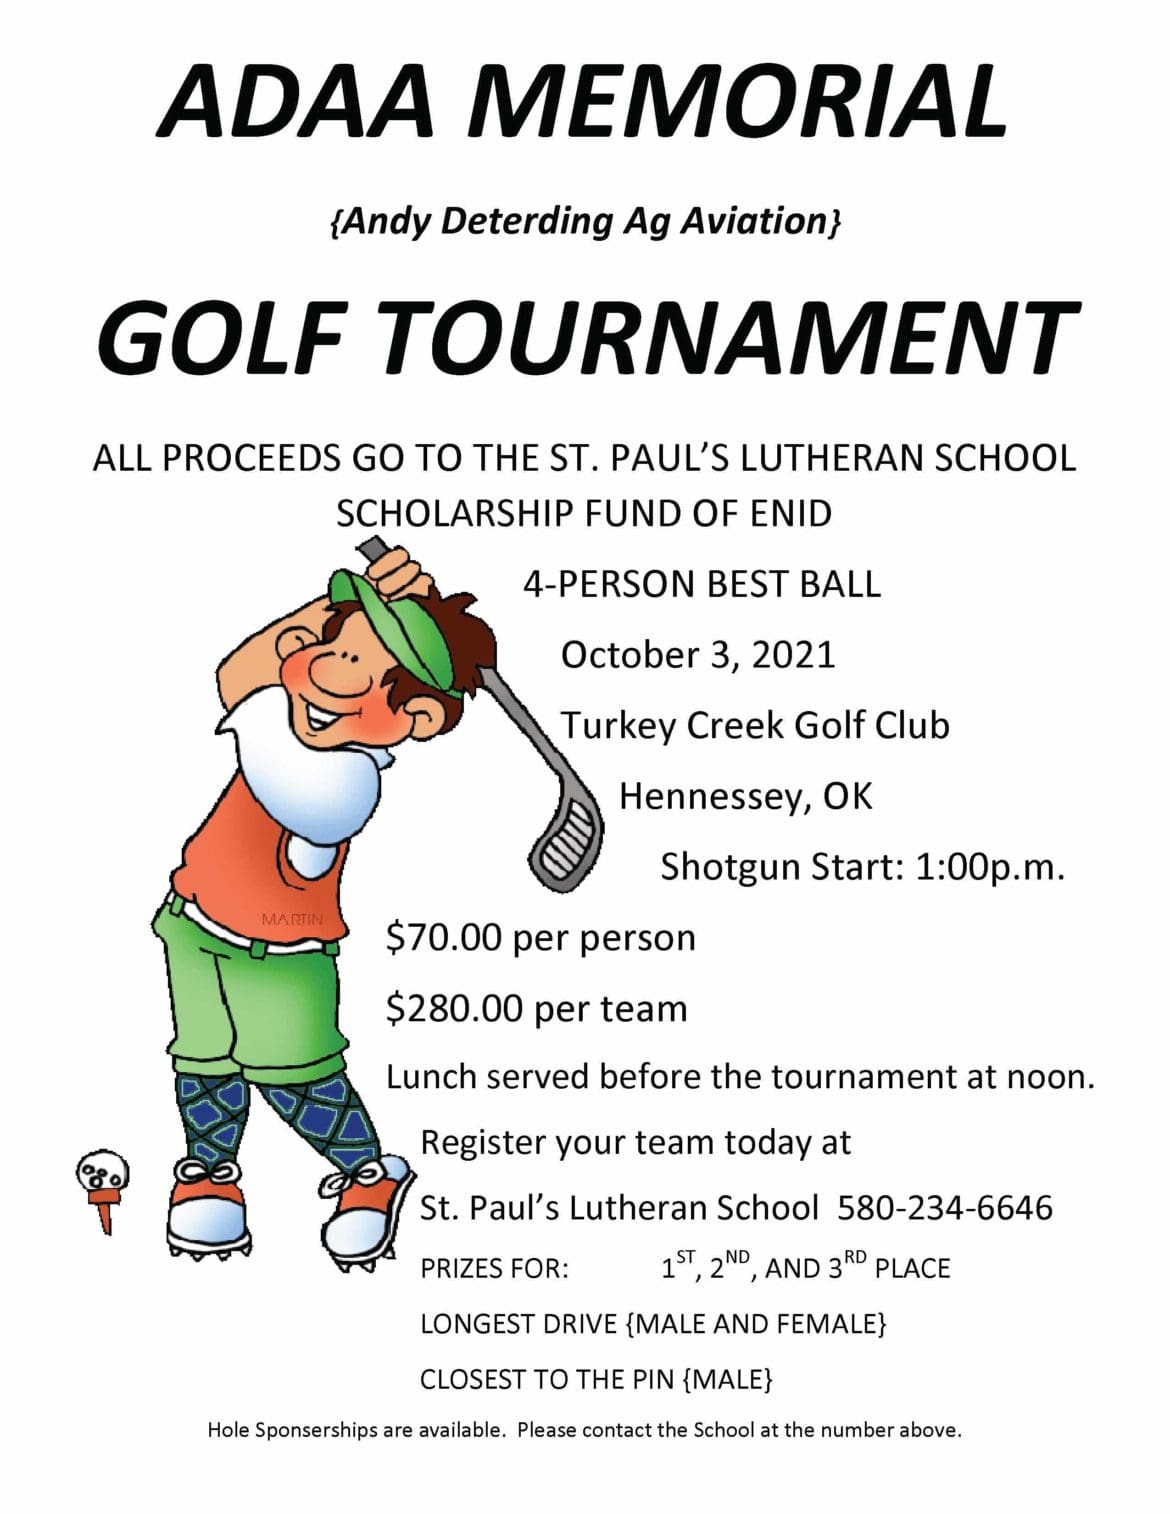 ADAA Memorial Golf Tournament October 3